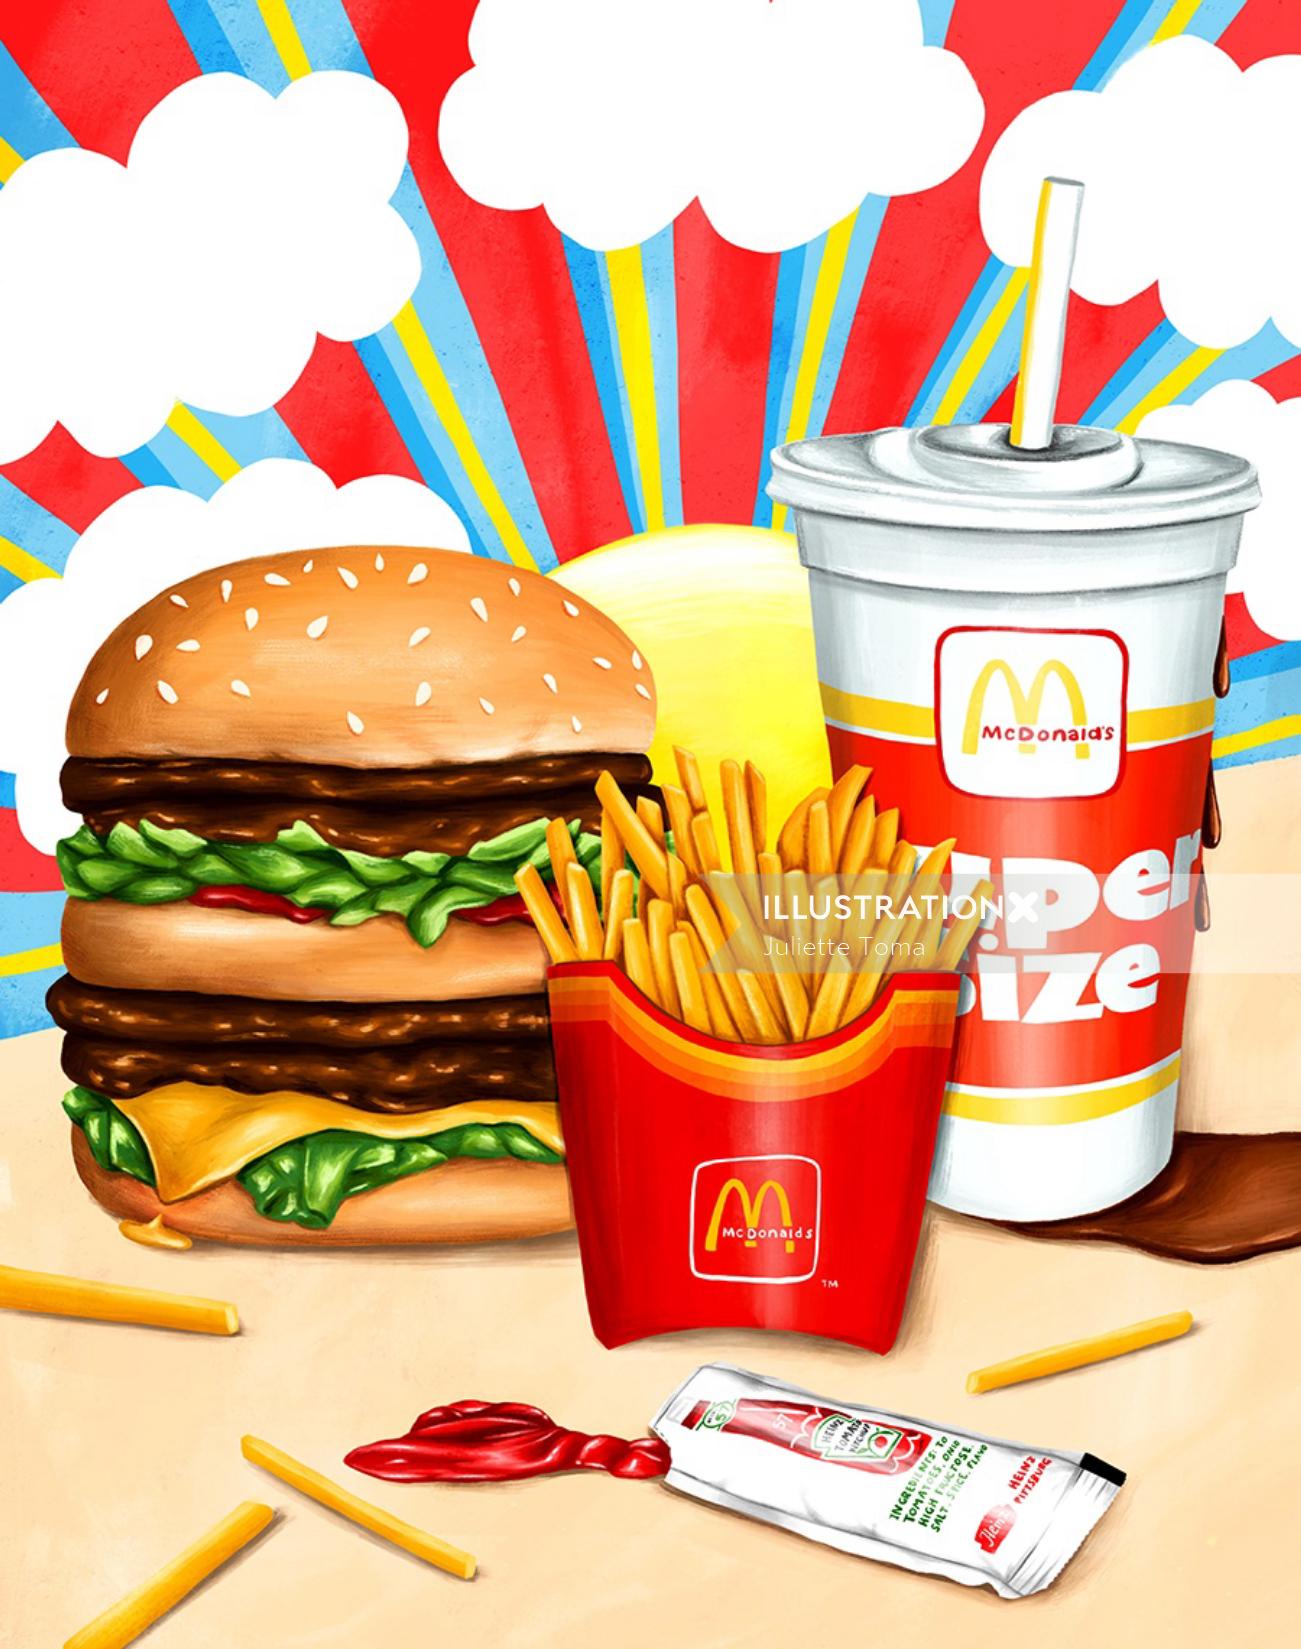 Photorealistic illustration of McDonald’s Burger Meal